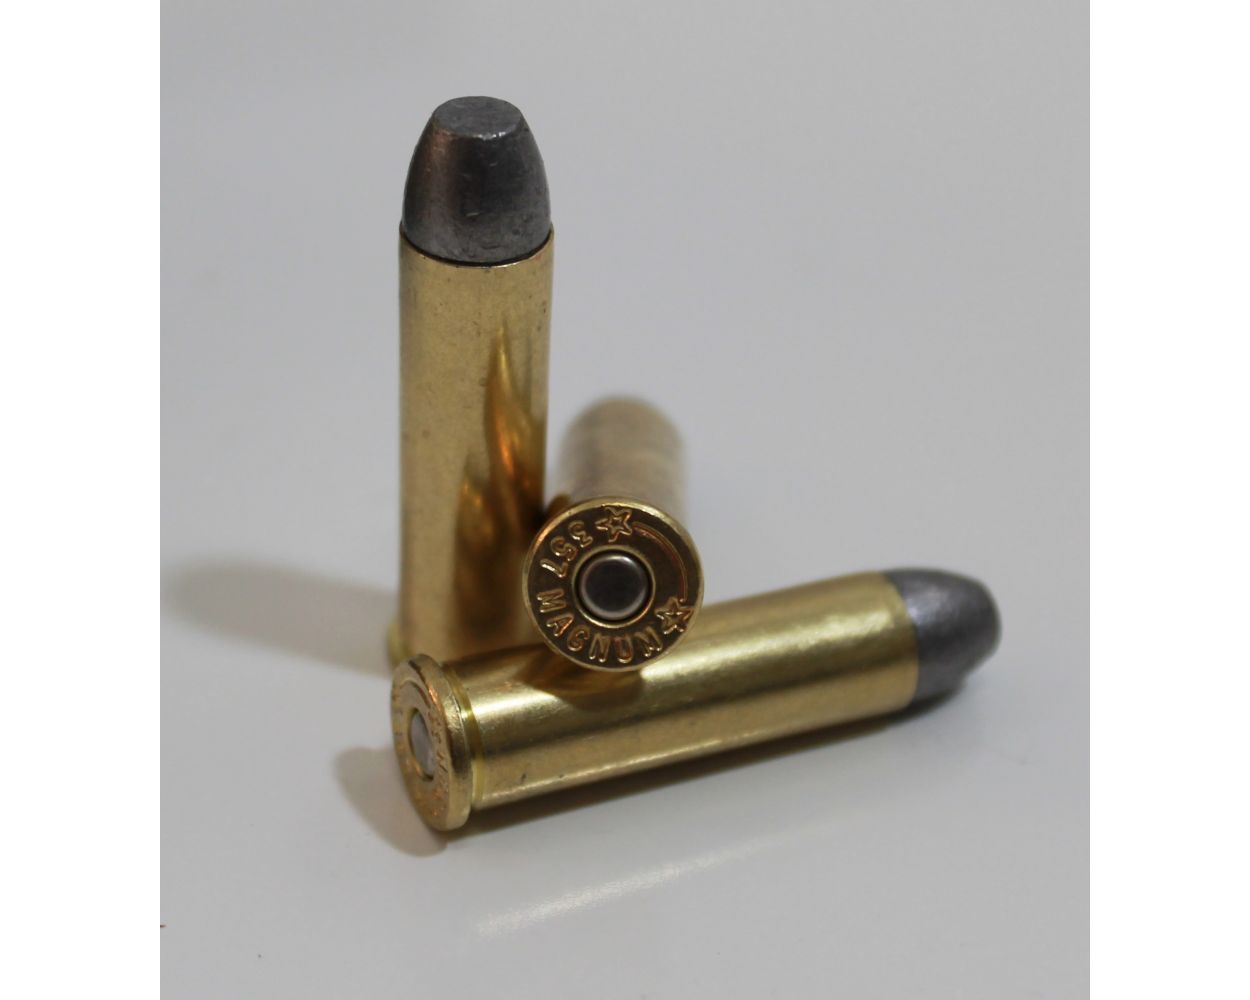 357 Magnum 125 Grain Flat Point Black Powder Ammo Box of 50